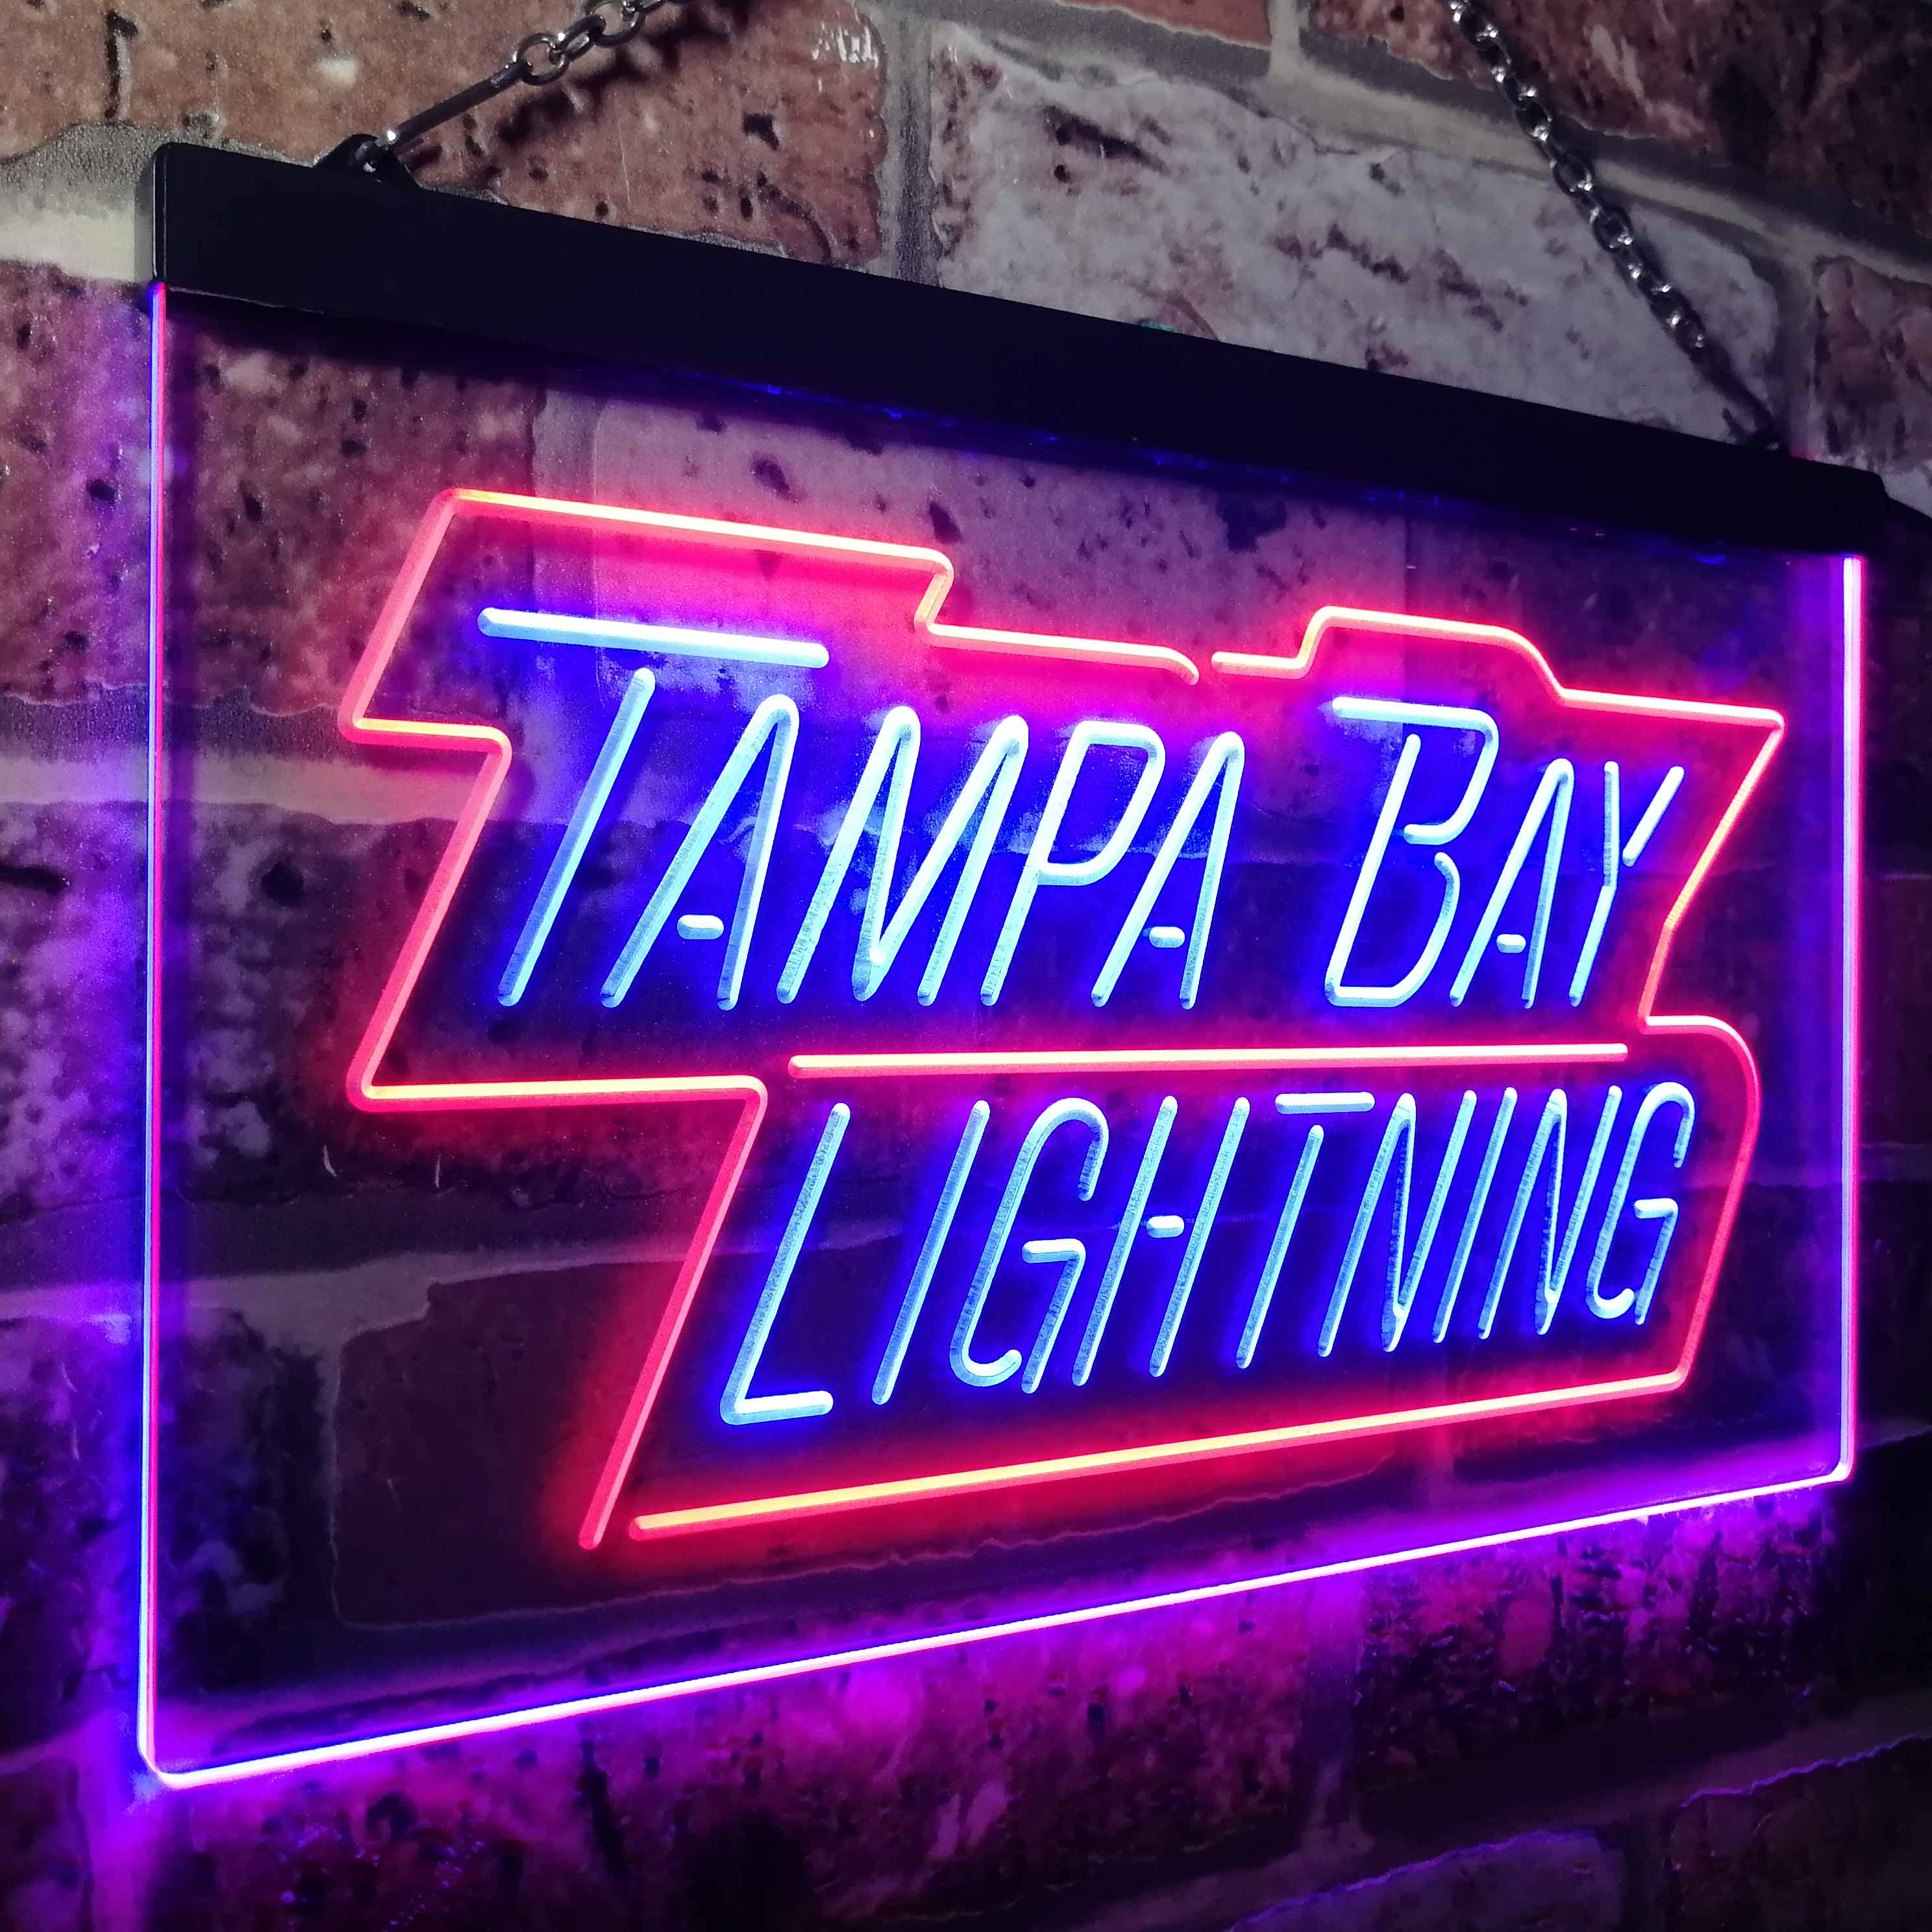 Tampas Bays League Club Lightning Script LED Neon Sign